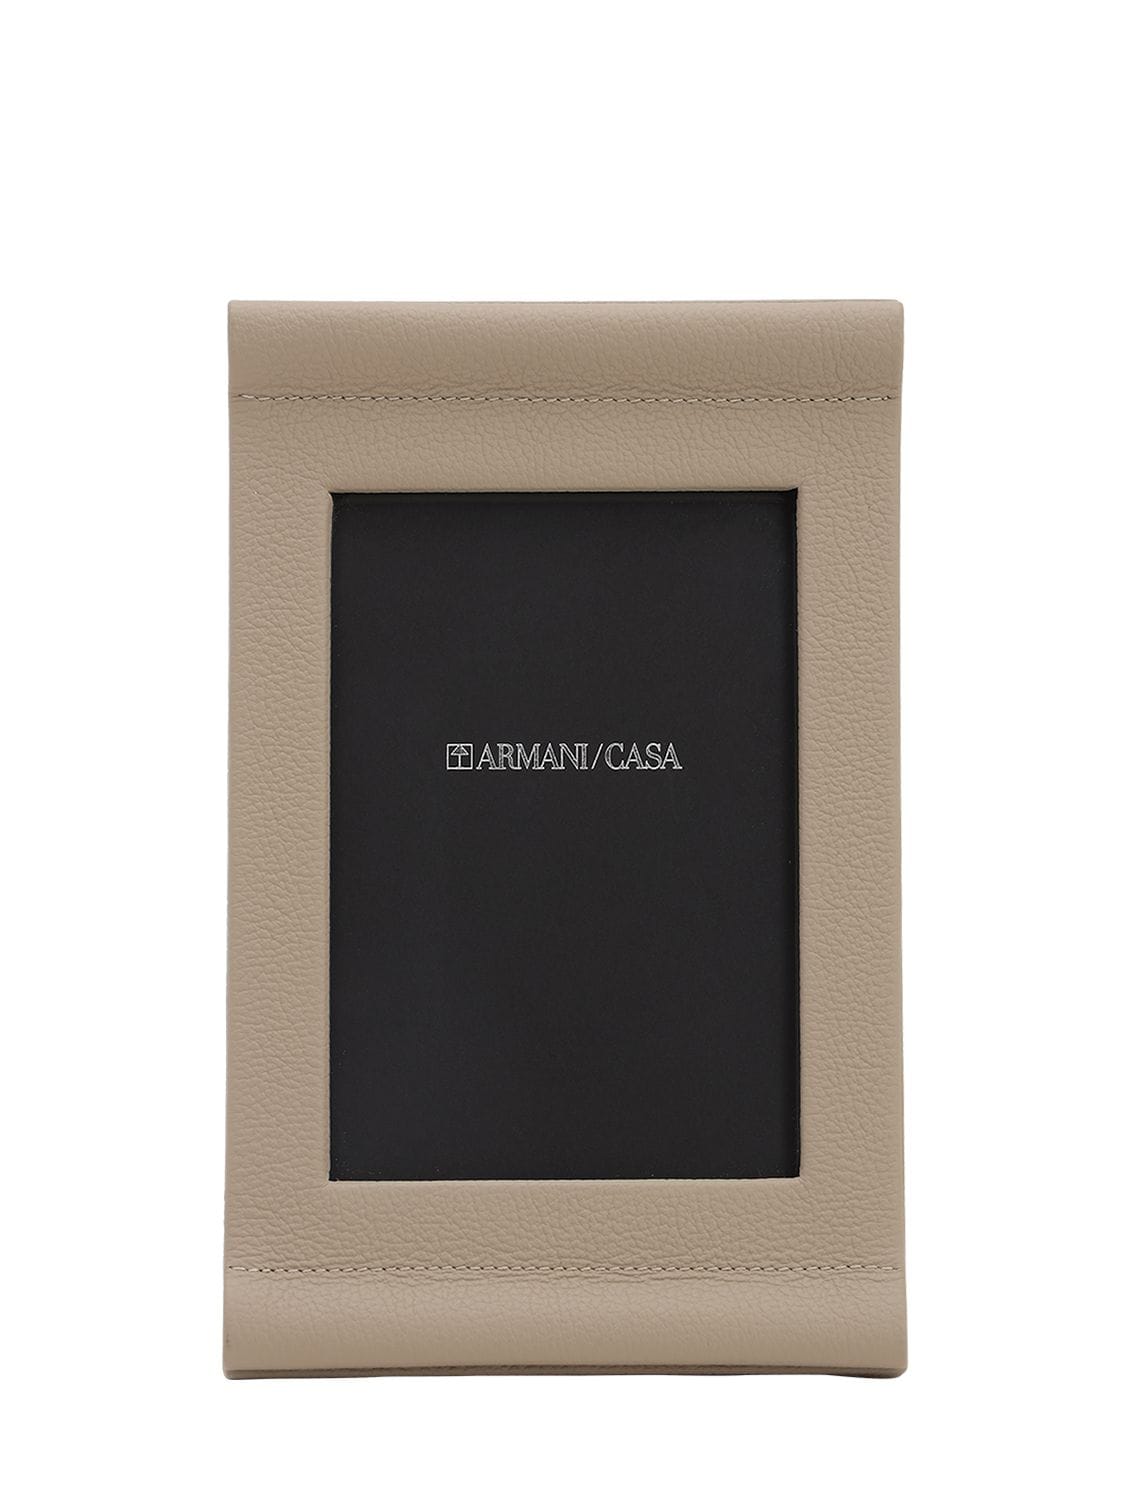 Armani/casa Small Orwell Leather Frame In Grey